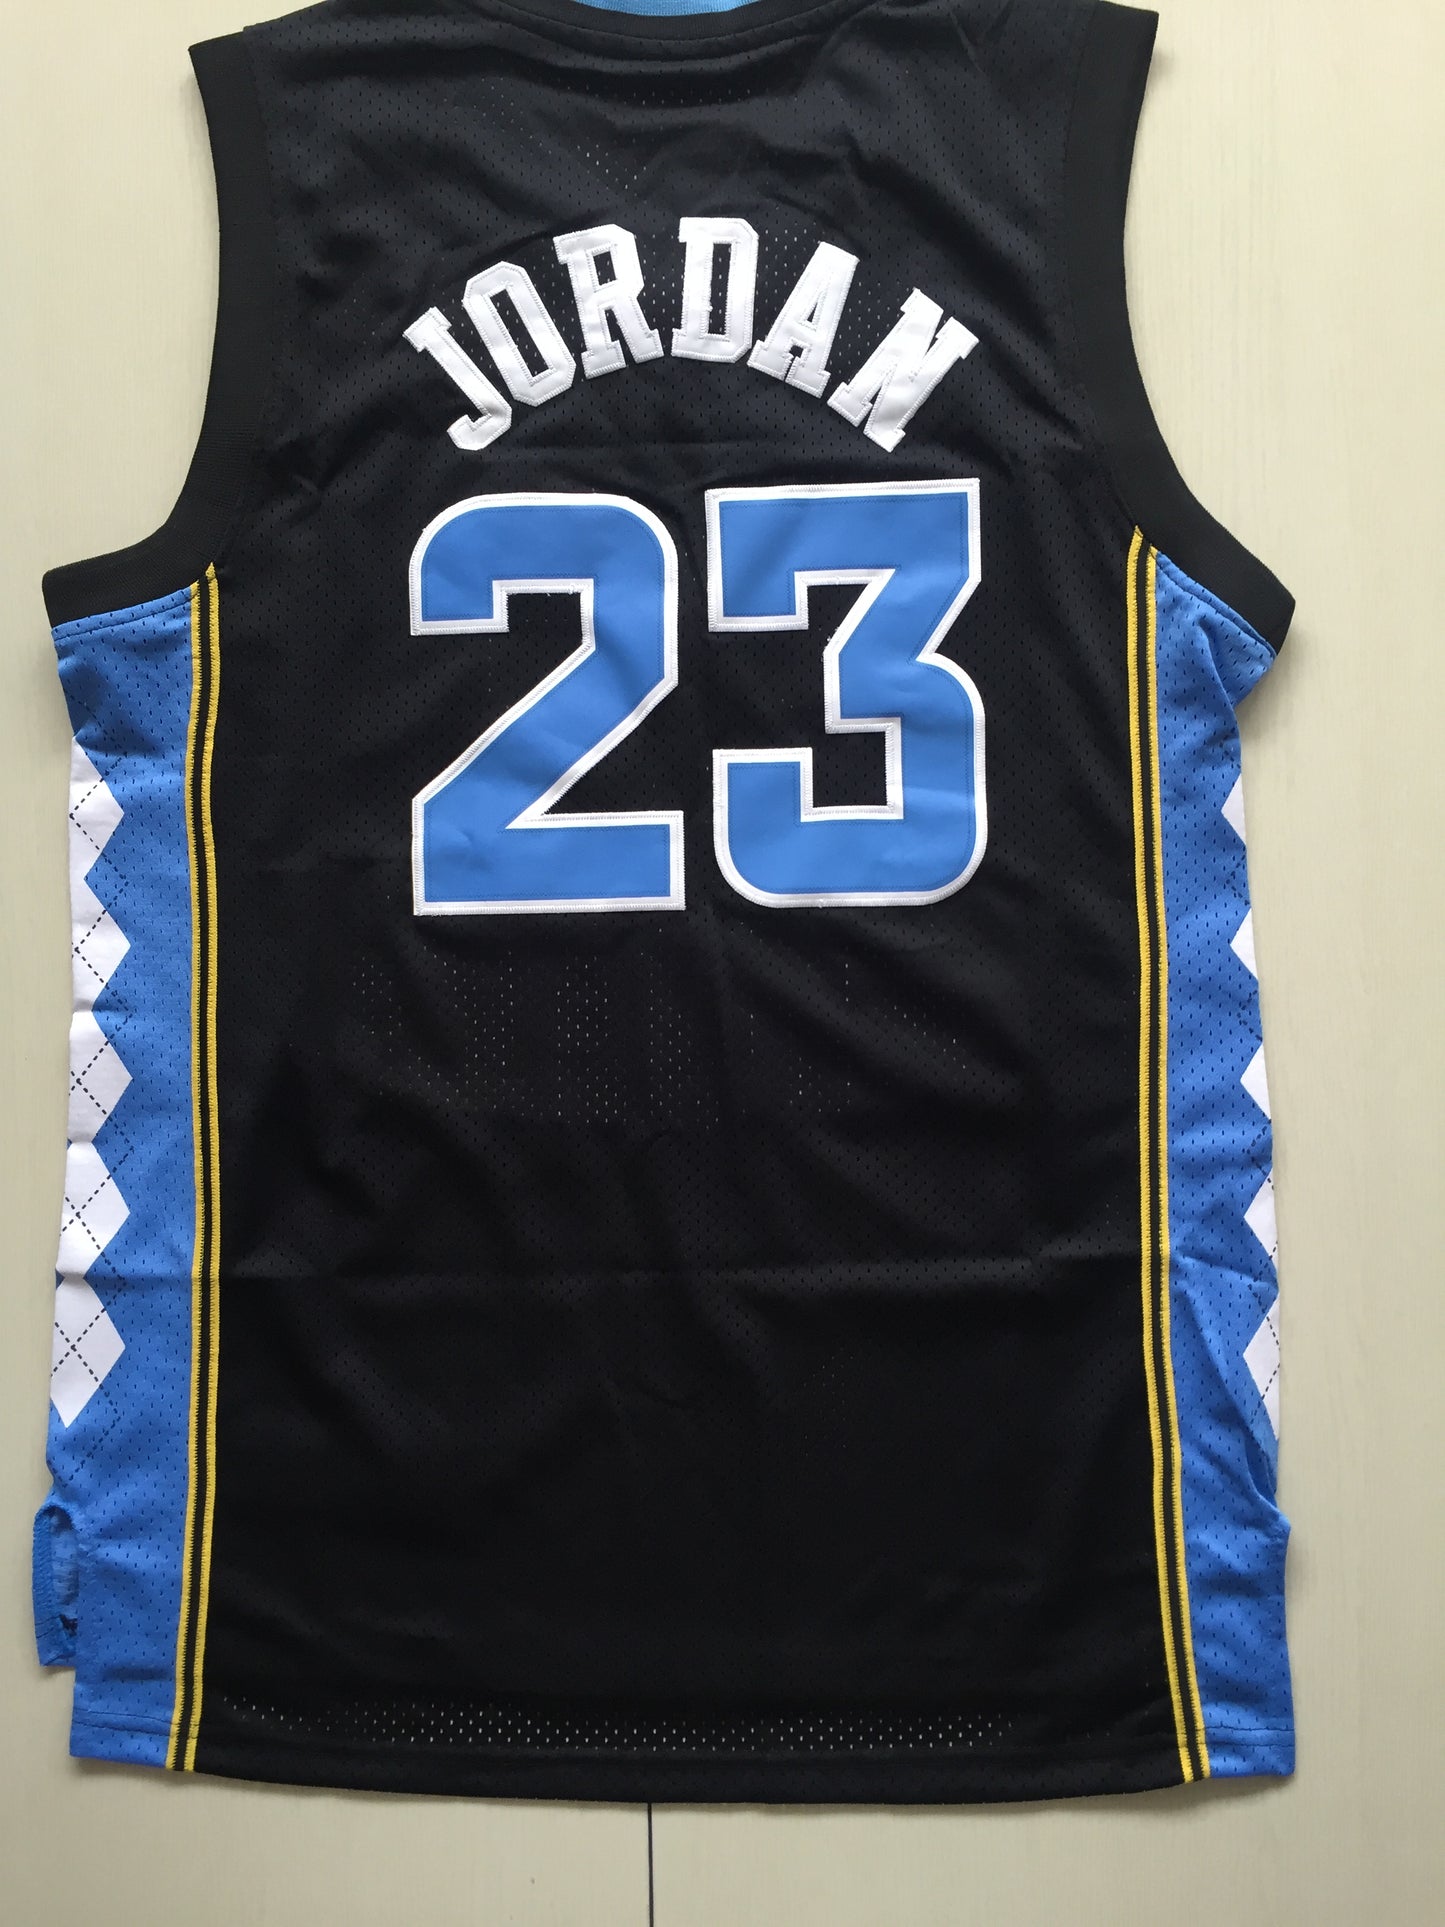 NBA NCAA Retro Michael Jordan North Carolina (White, Blue, Black)